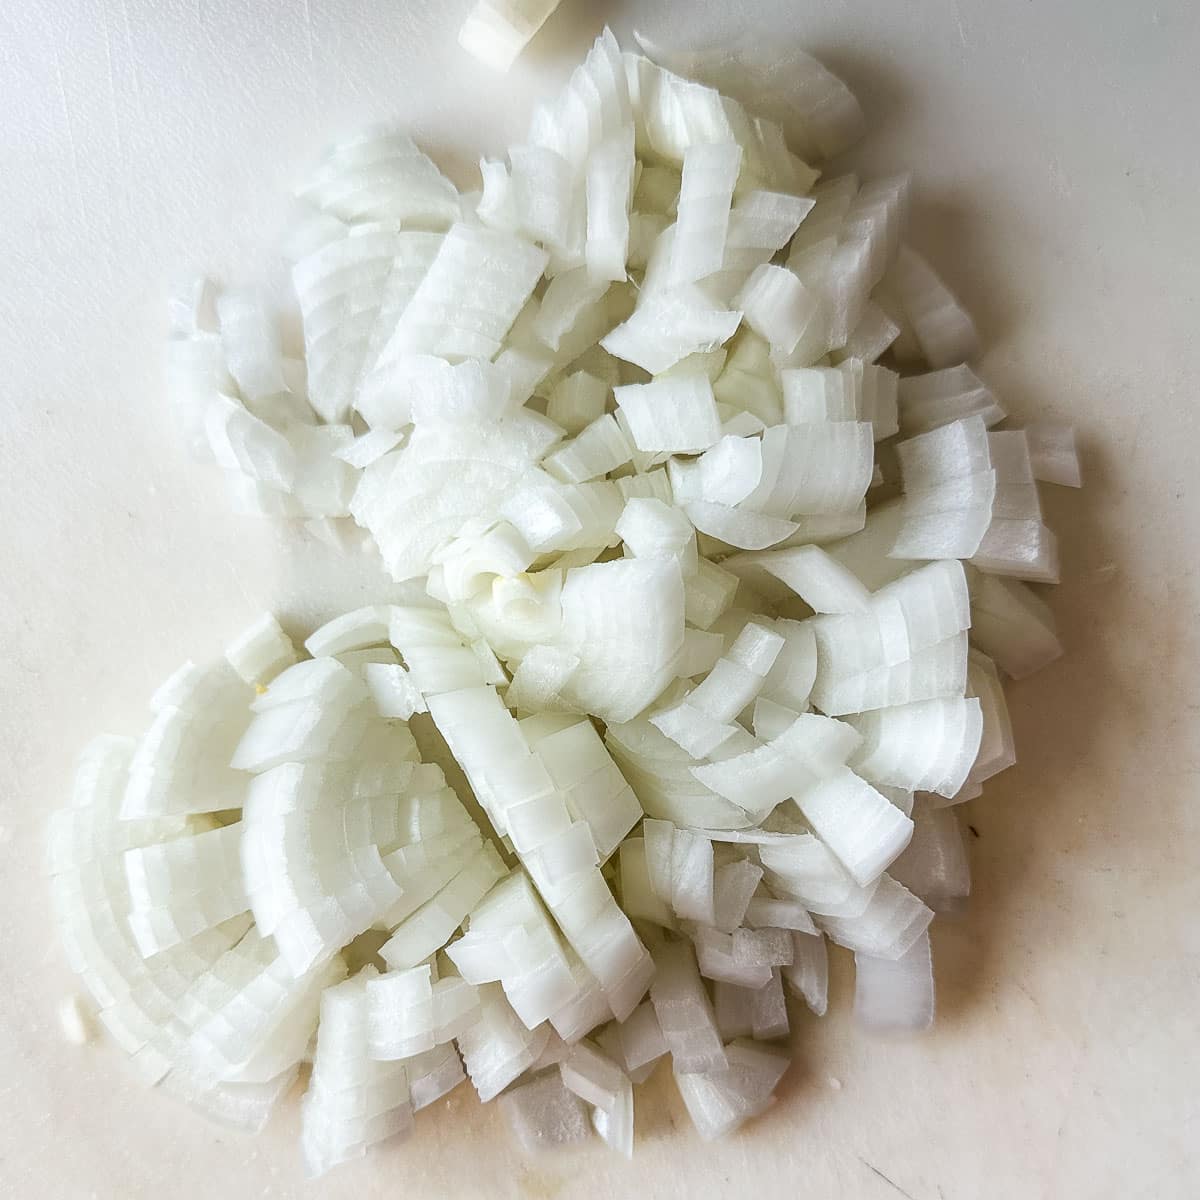 Chopped onion on a white cutting board.